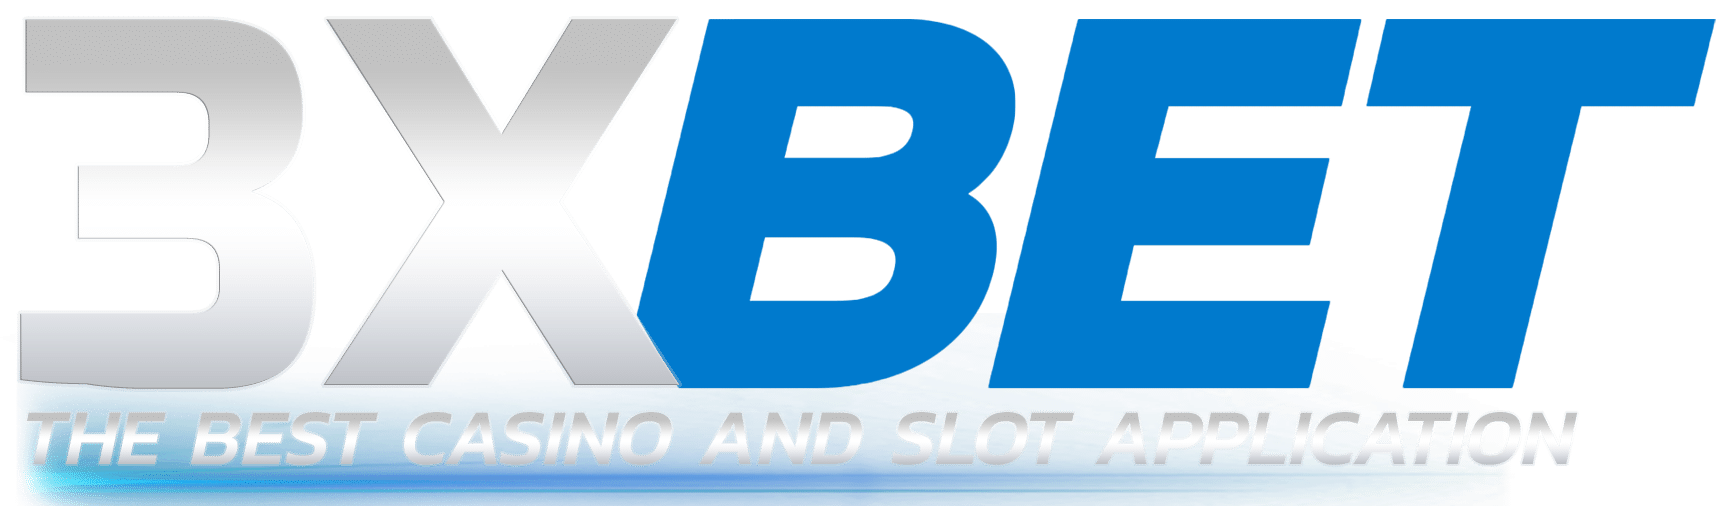 3xBET-logo